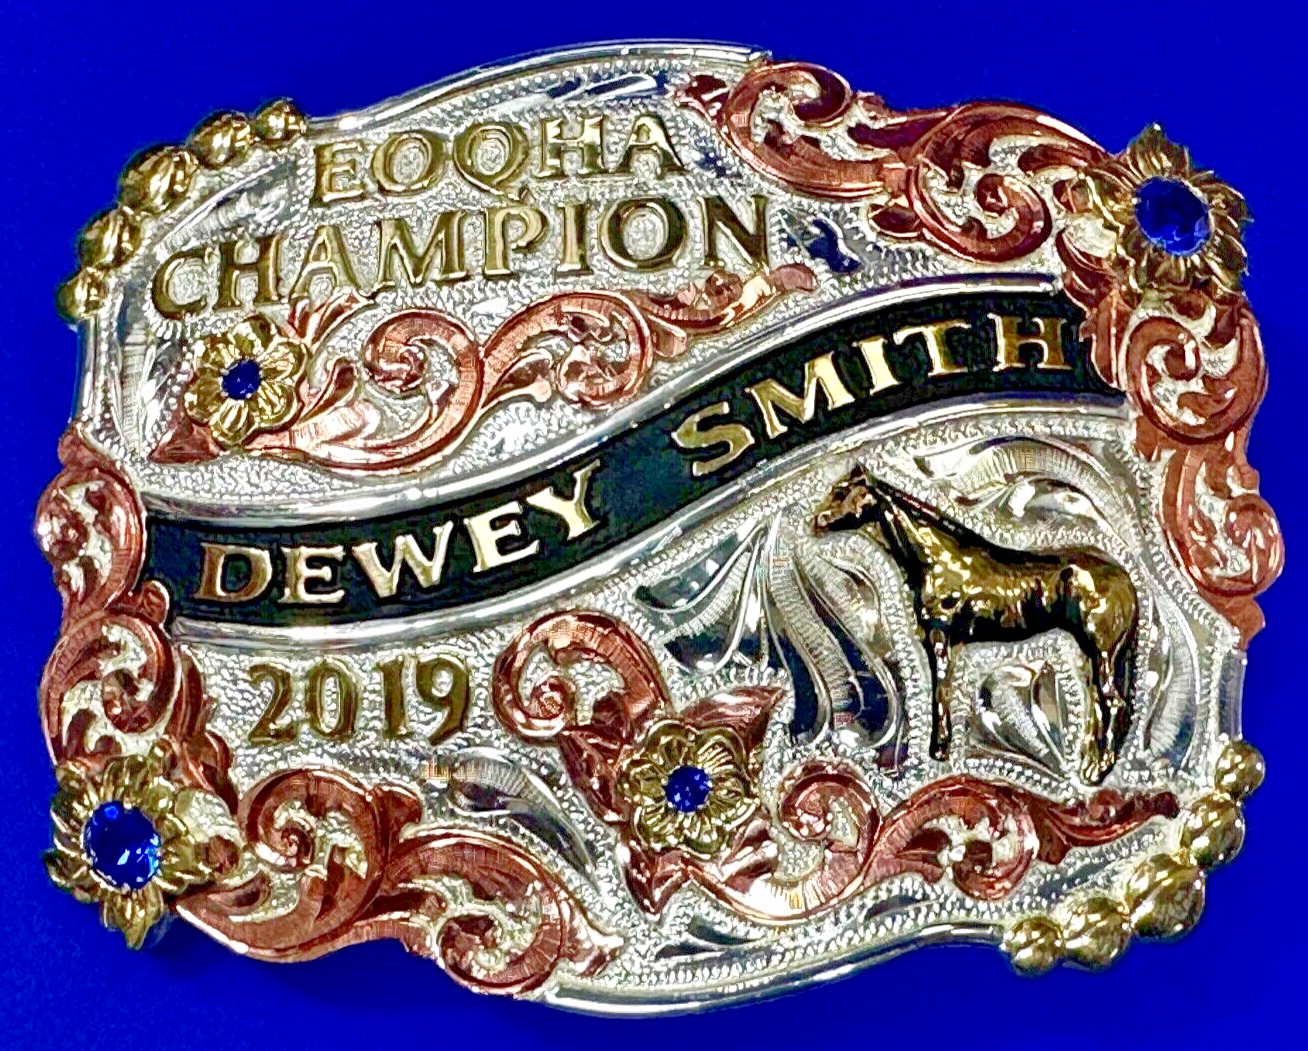 Dewey Smith Eastern Ohio Quarter Horse Champion 2019 Trophy Belt Buckle